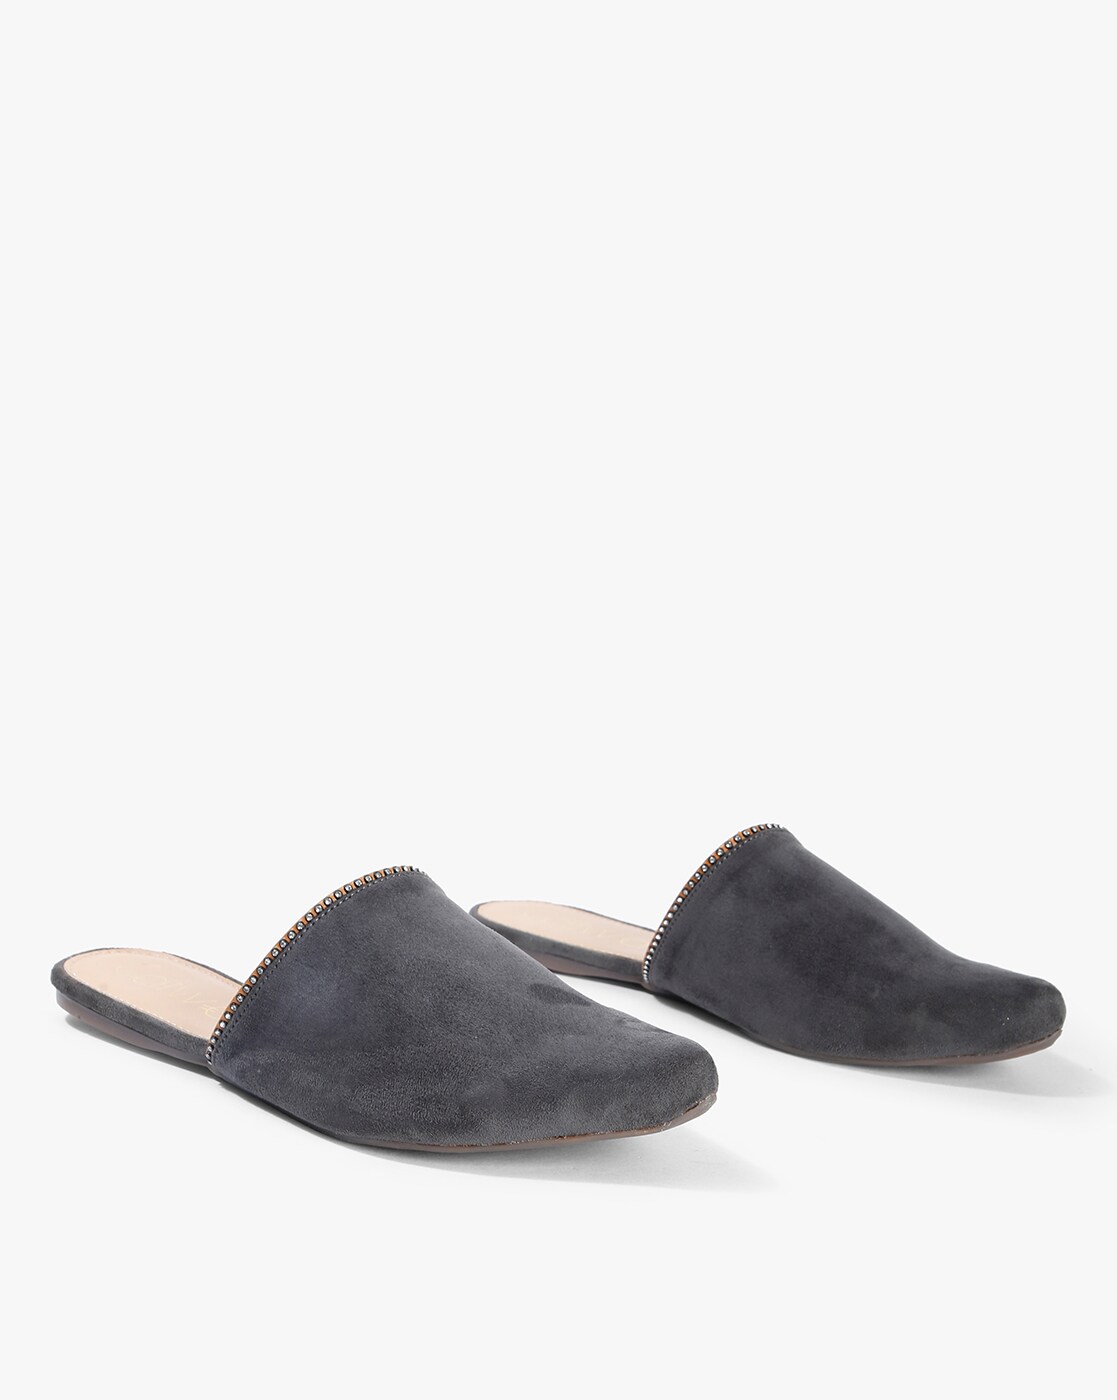 Grey Flat Sandals for Women by CATWALK 